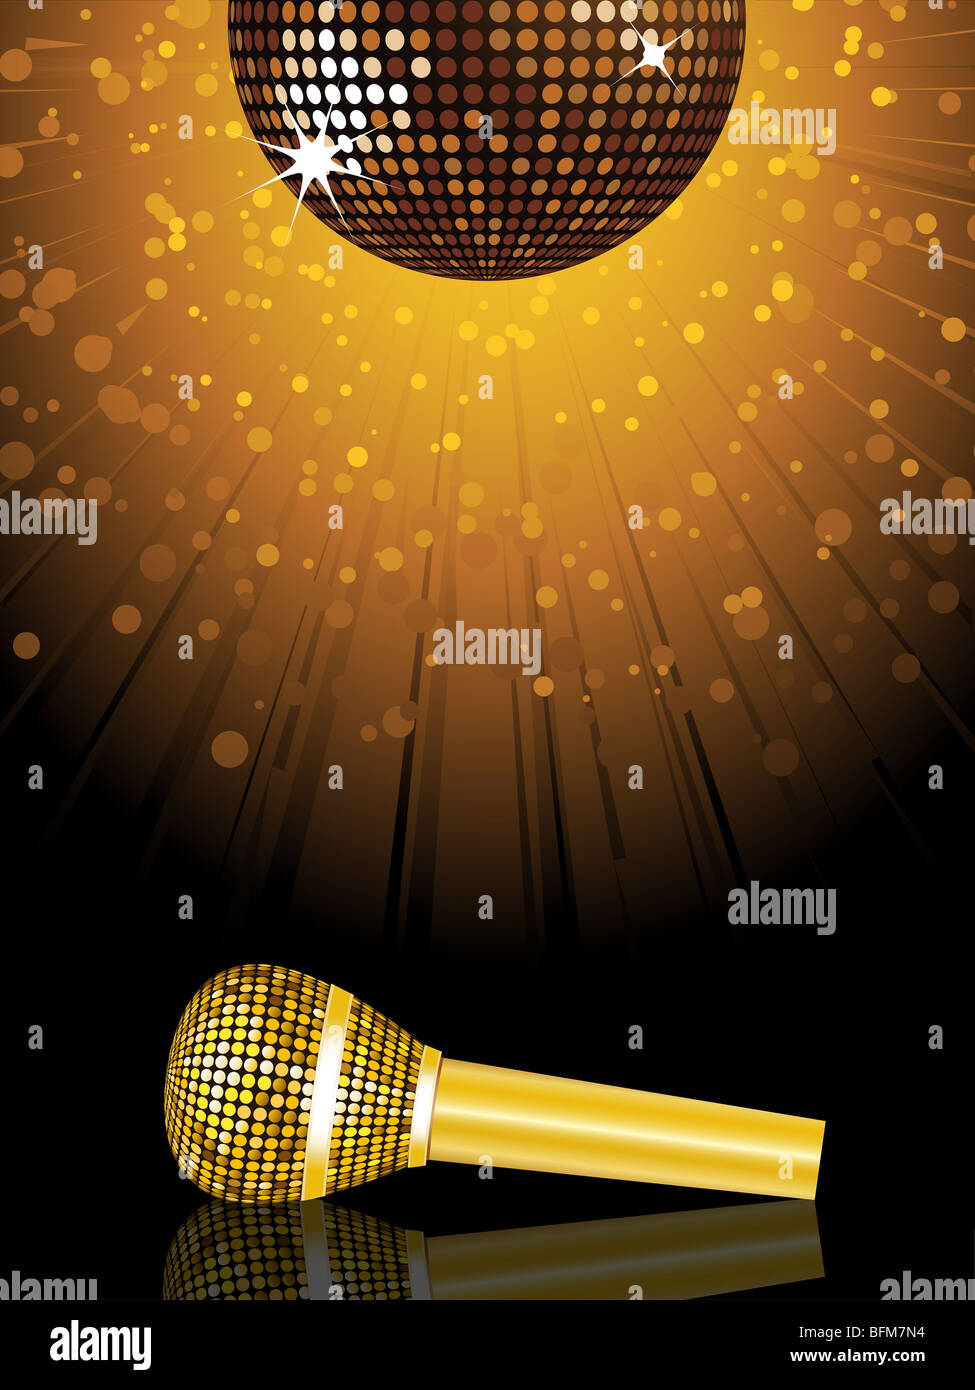 На шаре караоке. Золотой микрофон. Микрофон с золотом. Караоке фон. Золотой диско шар.